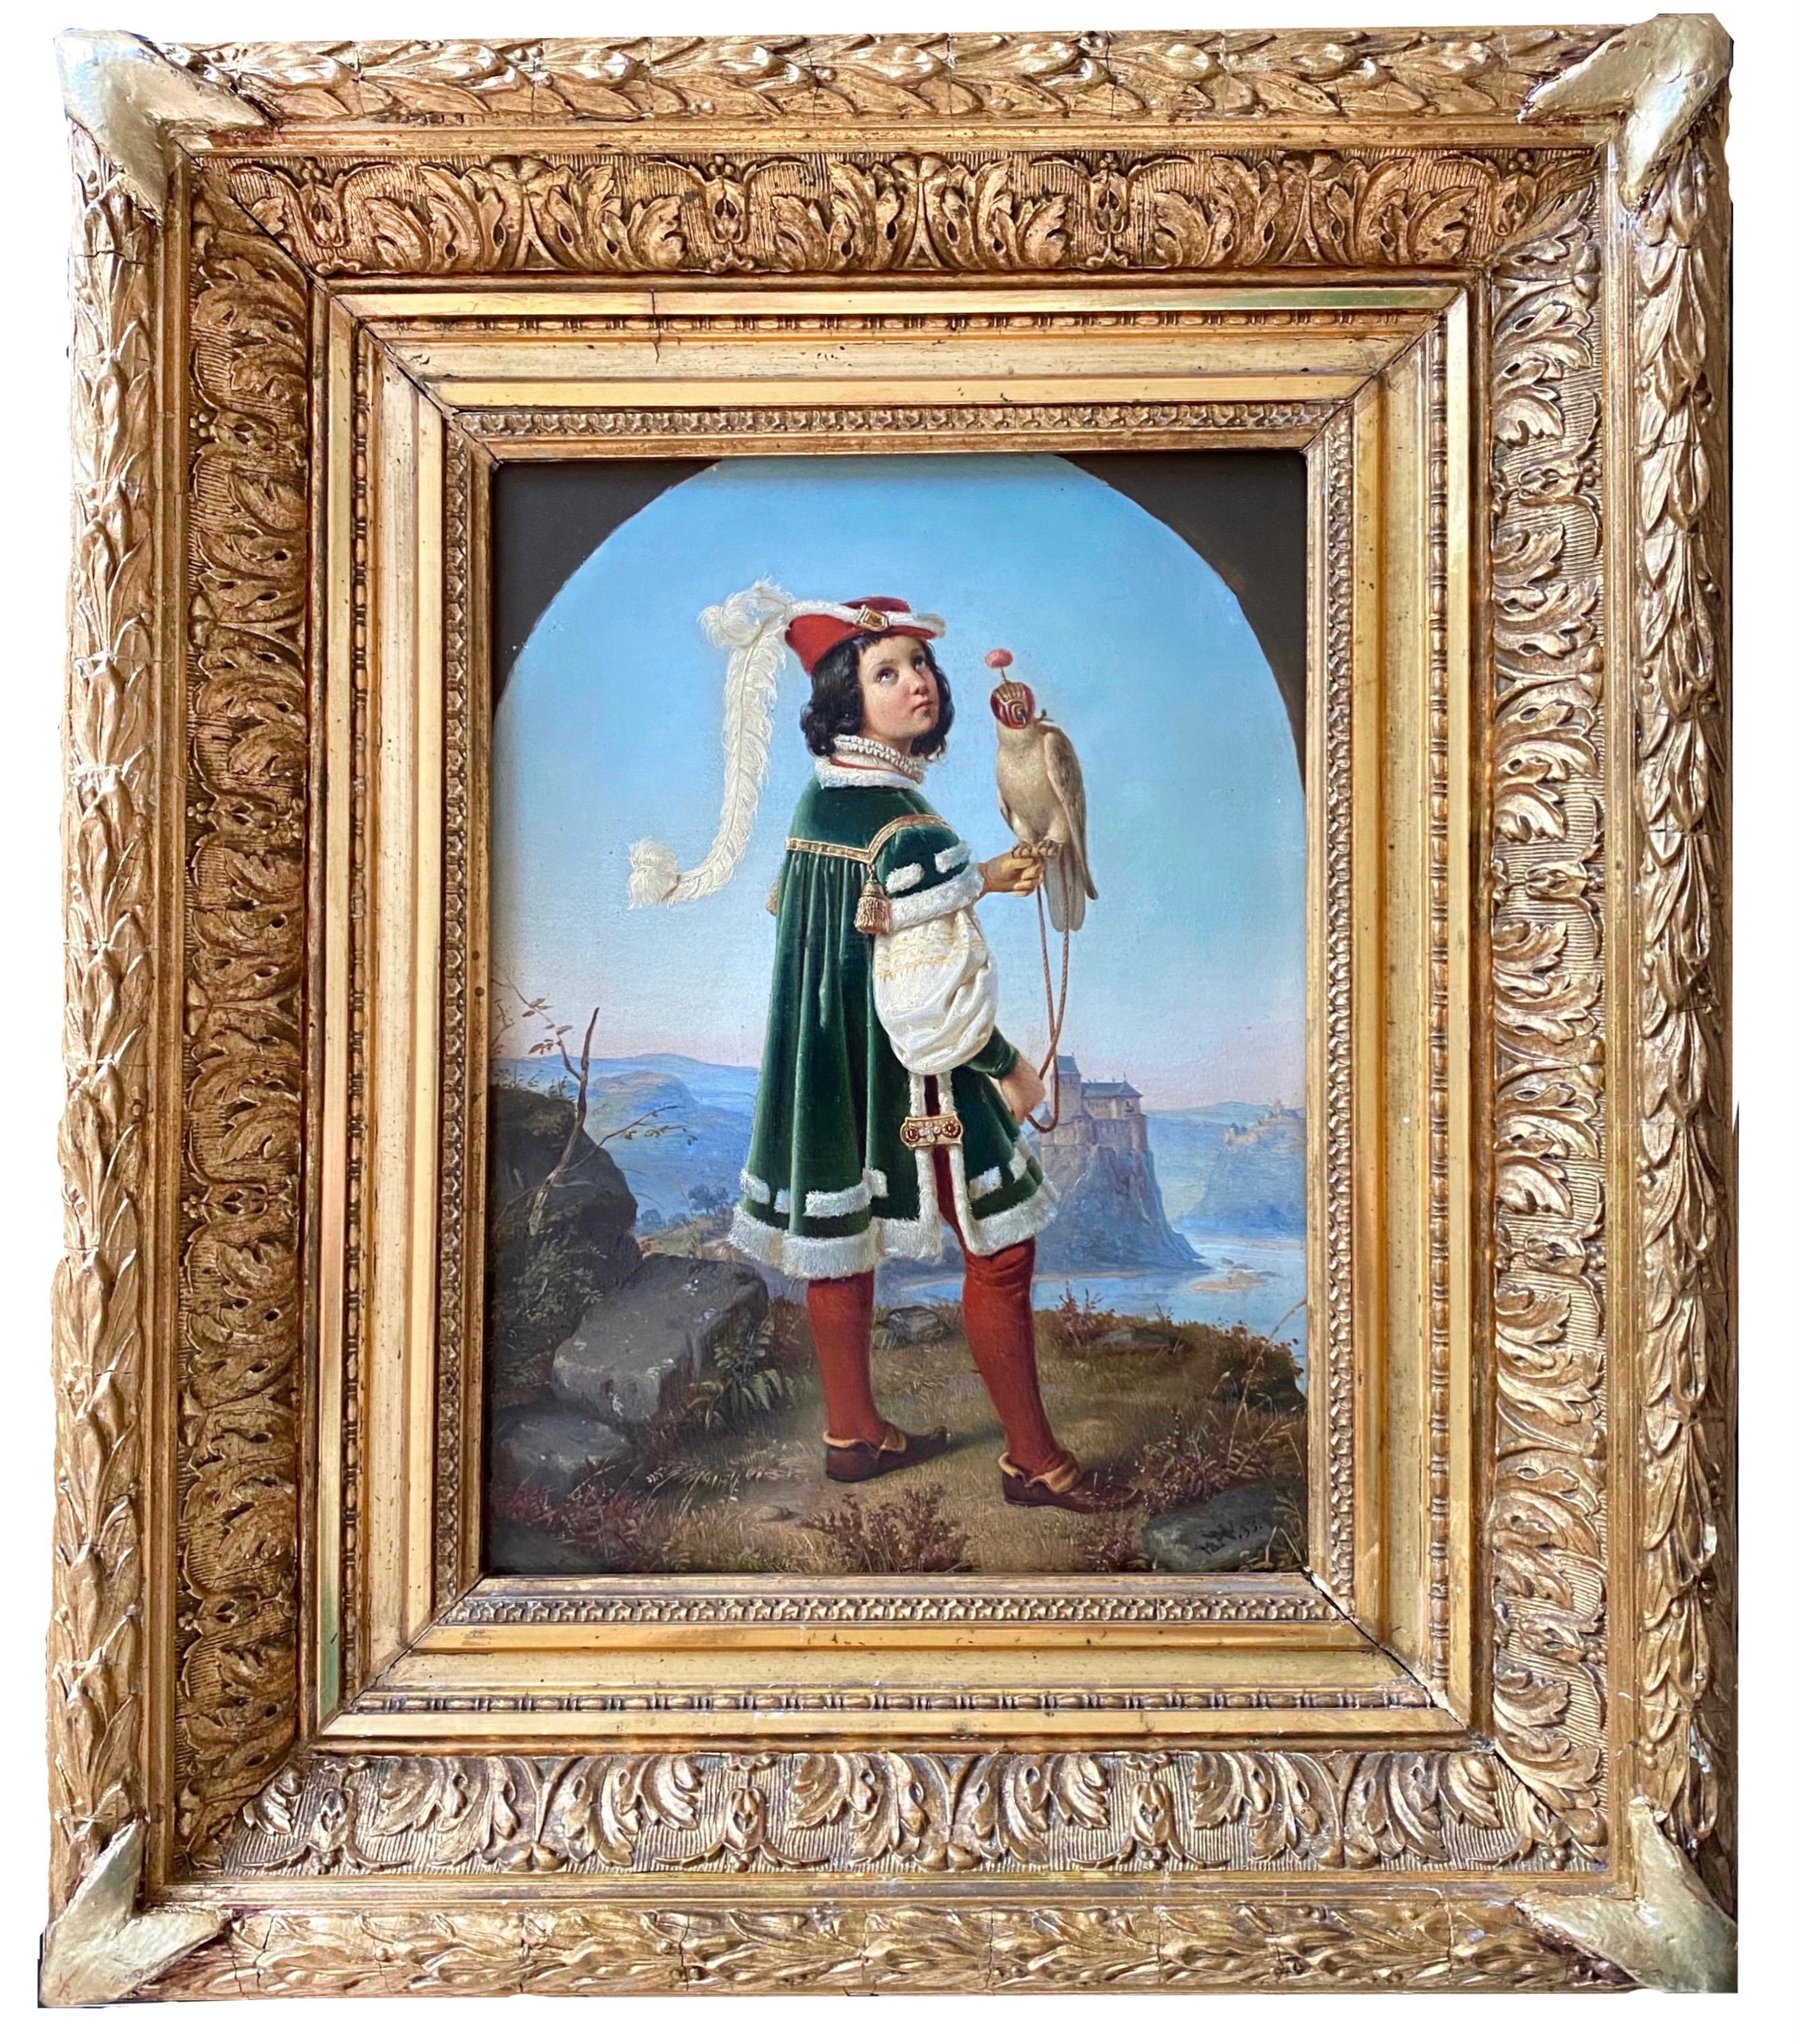 Wilhelm Nerenz Figurative Painting - 19th century German Nazarene painting - The young prince - Nazarener Von Schadow